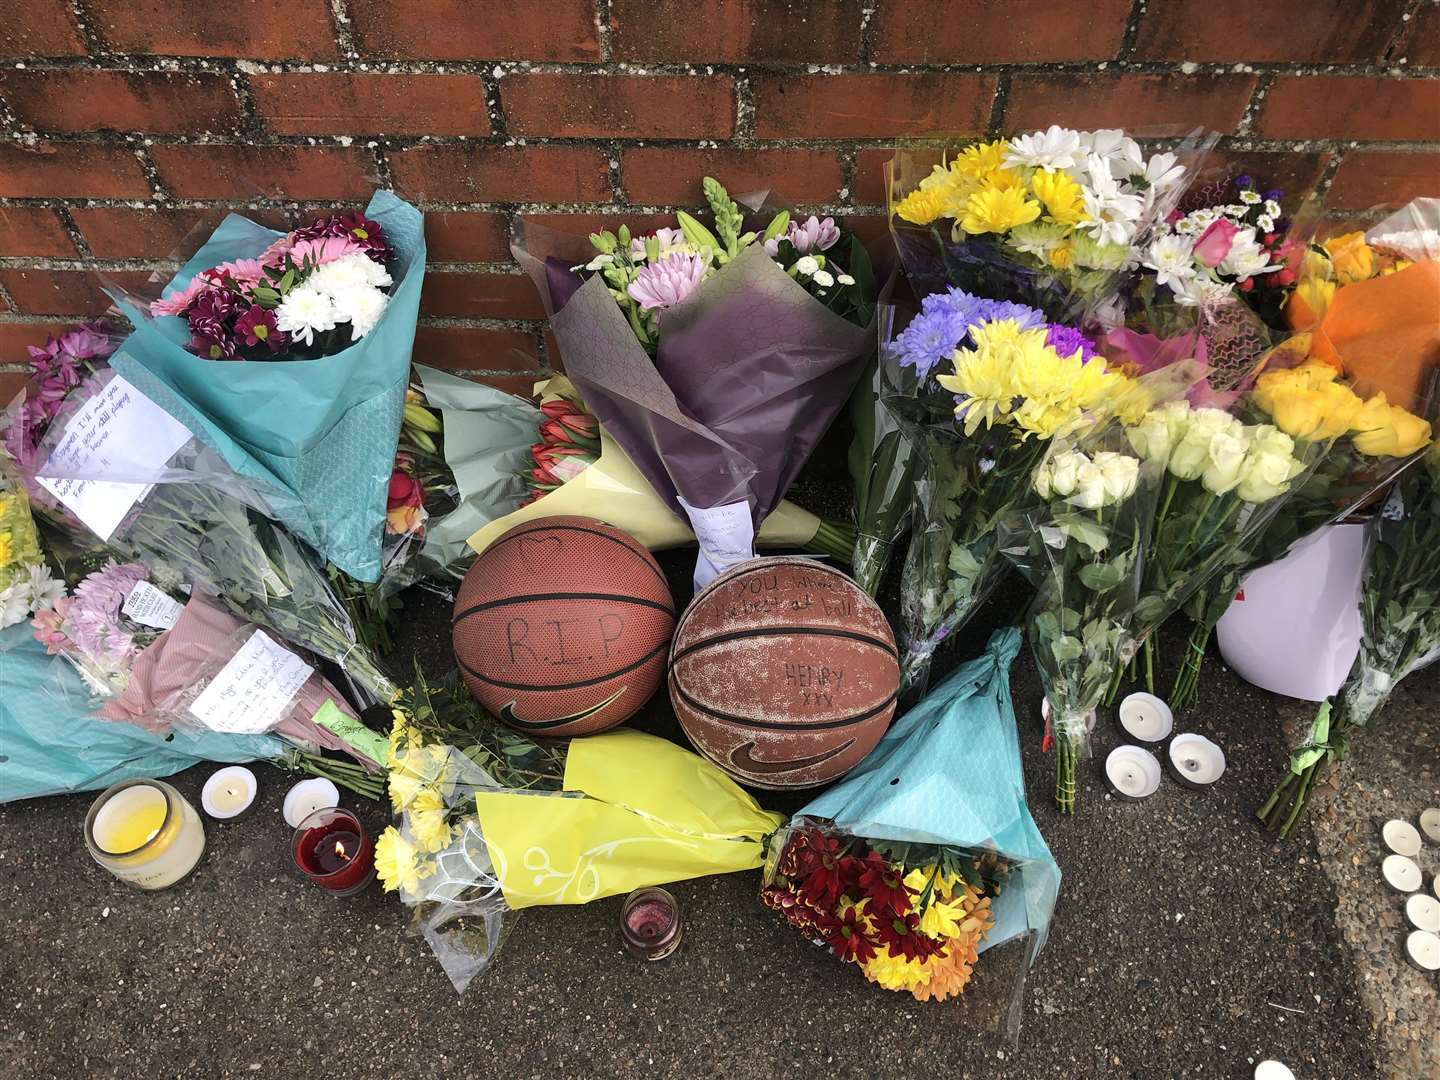 Basketballs are among the tributes